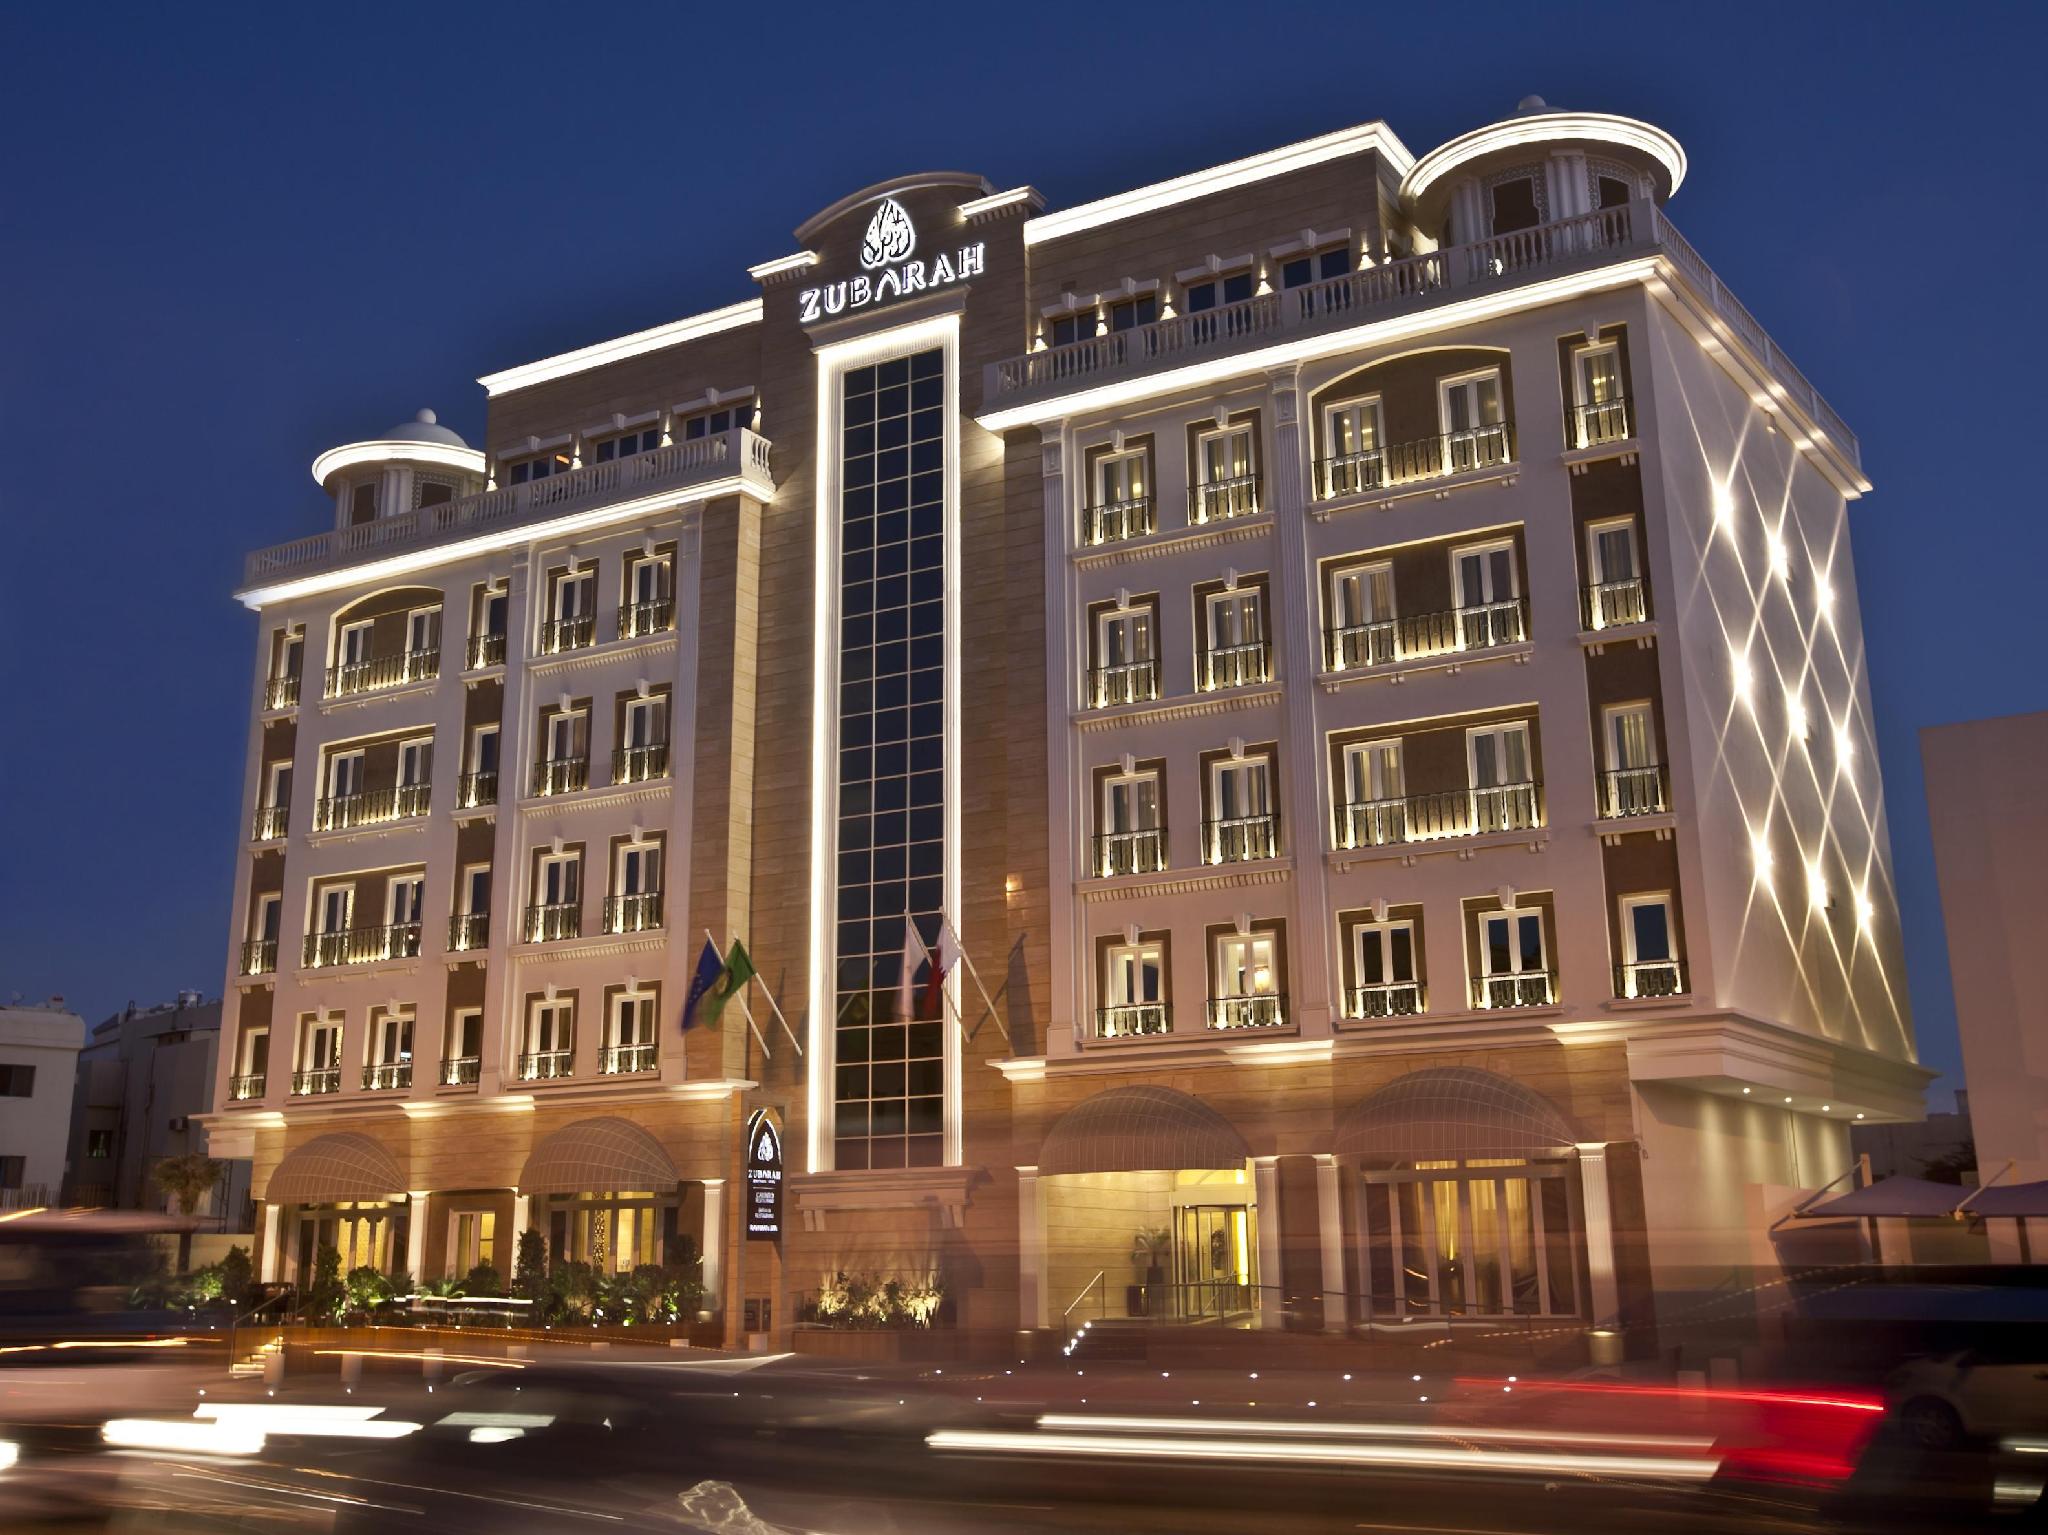 Zubarah Hotel - Doha, Qatar - Great discounted rates!